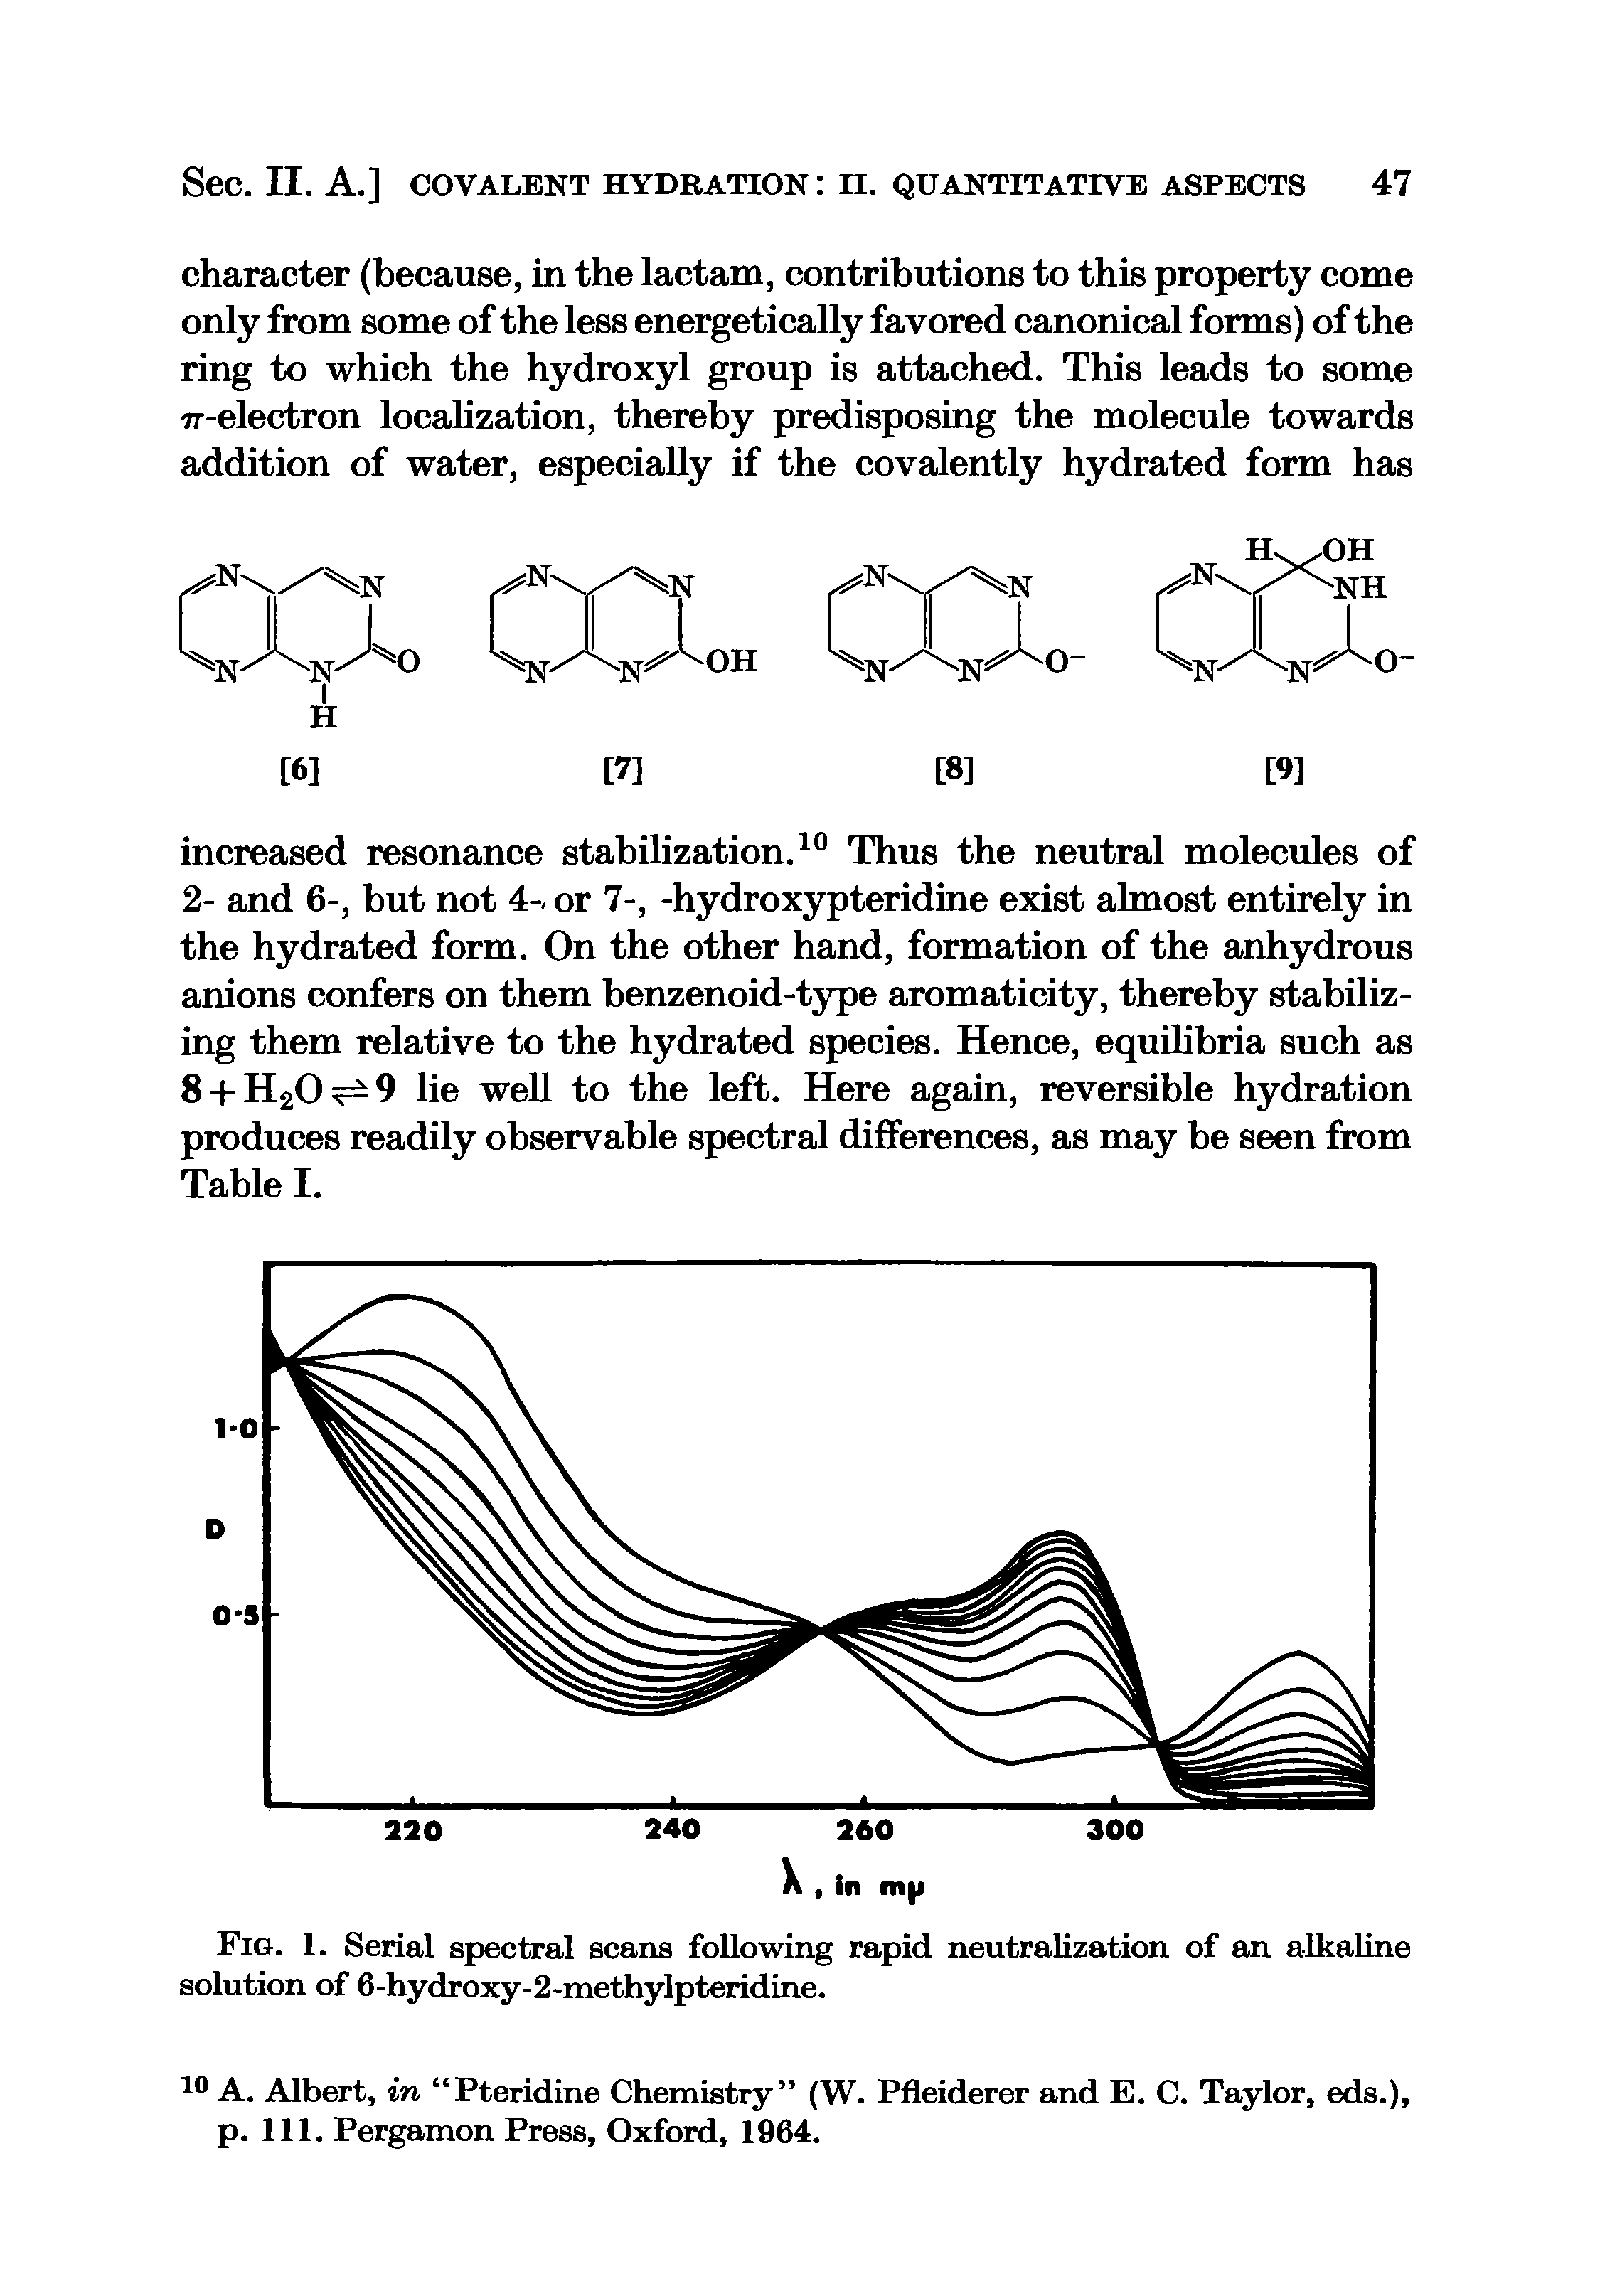 Fig. 1. Serial spectral scans following rapid neutralization of an alkaline solution of 6-hydroxy-2-methylpteridine.